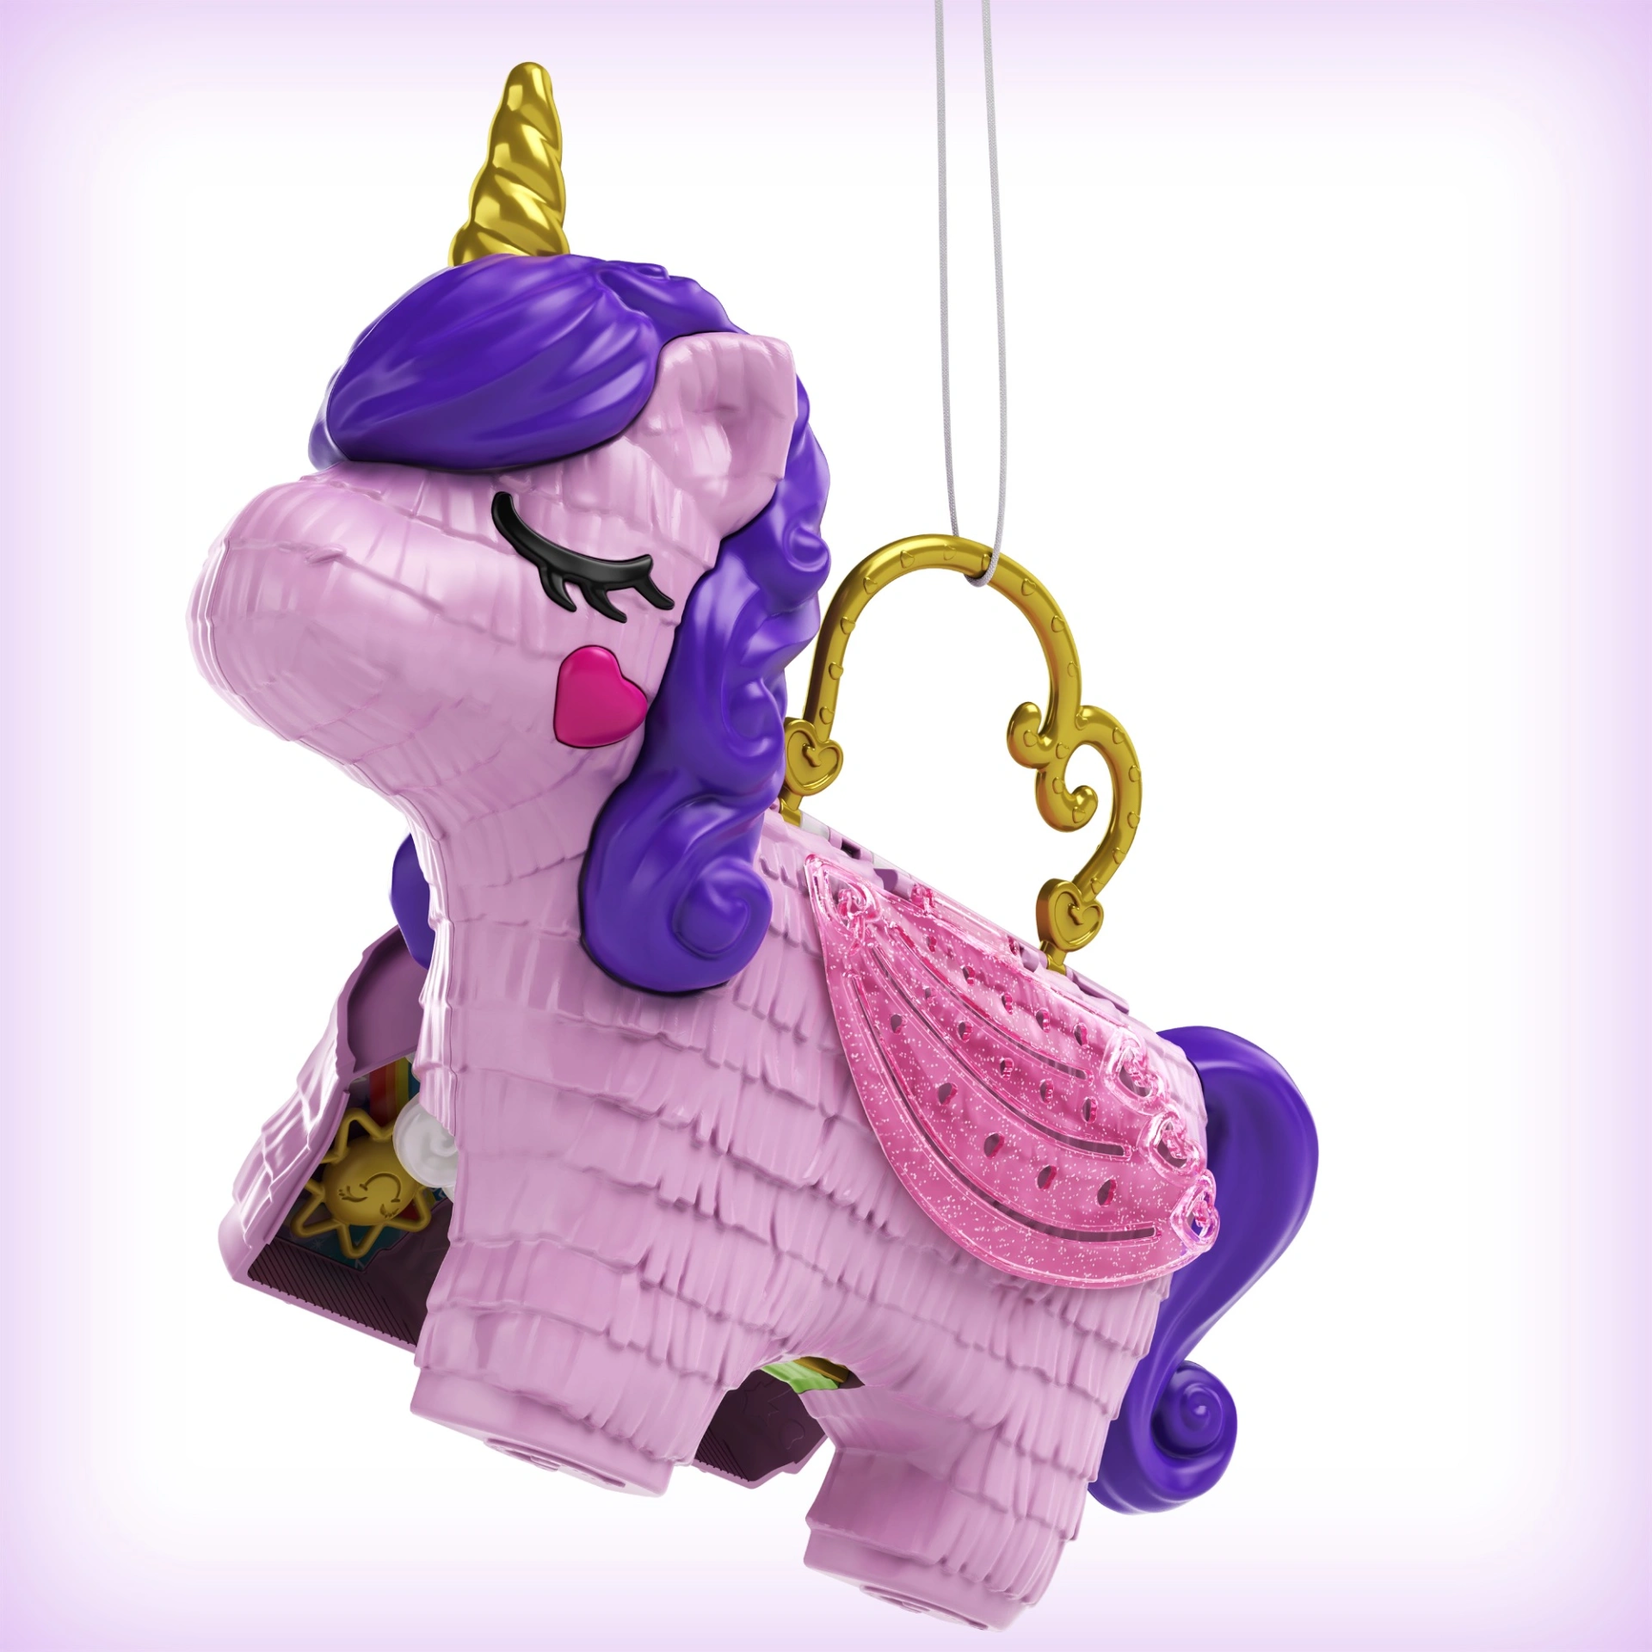 Mattel Polly pocket unicorn party